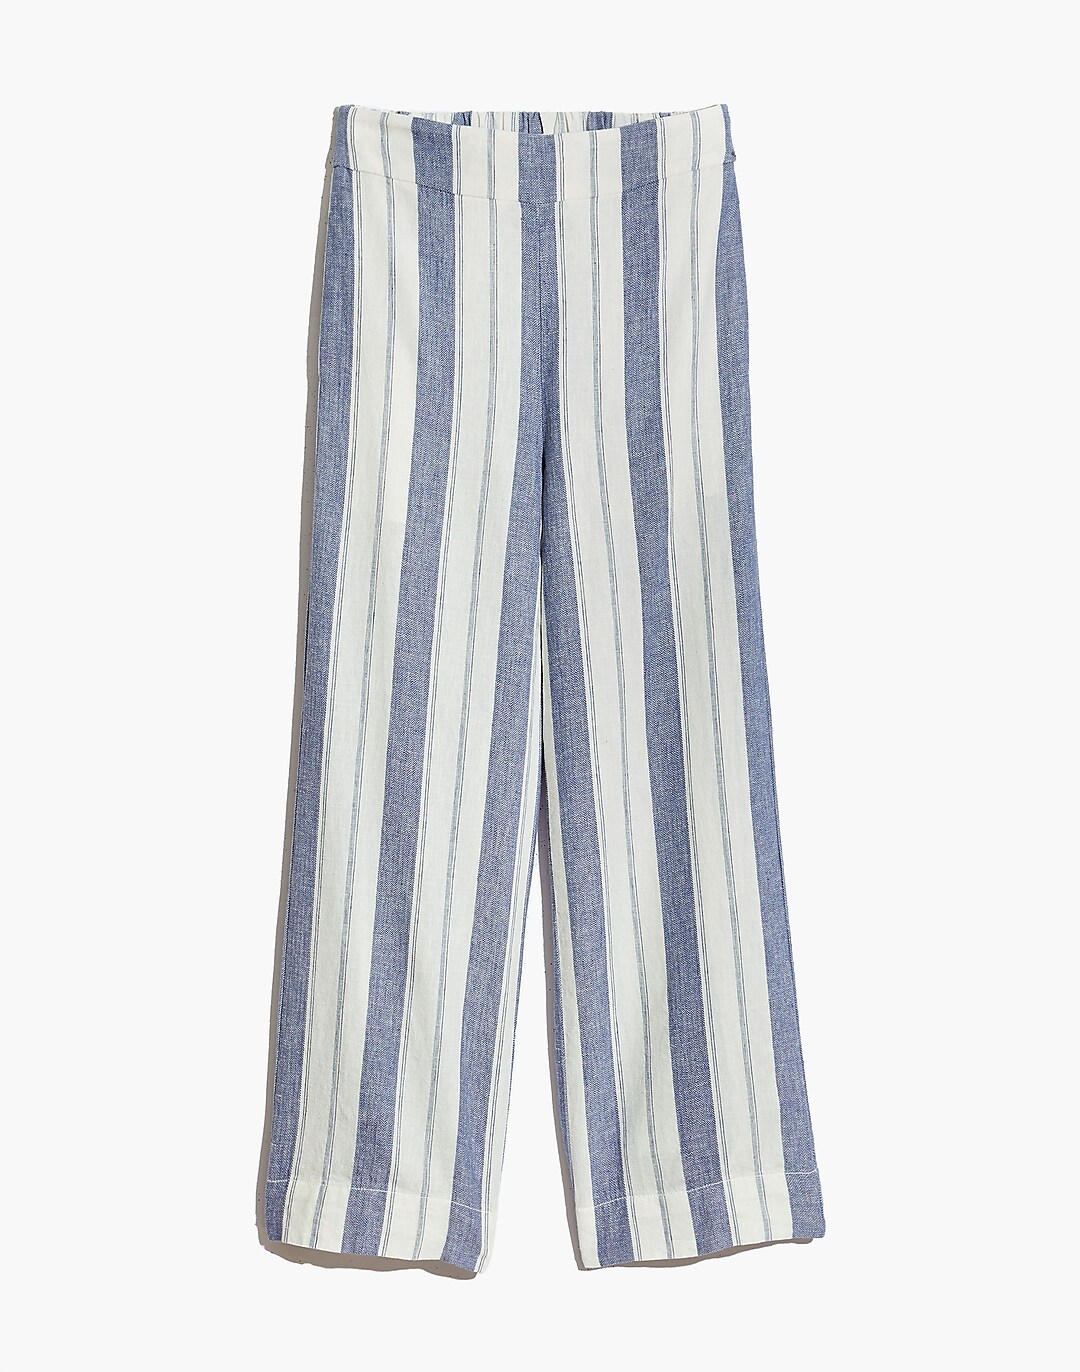 Linen-Cotton Huston Pull-On Crop Pants in Herringbone Stripe